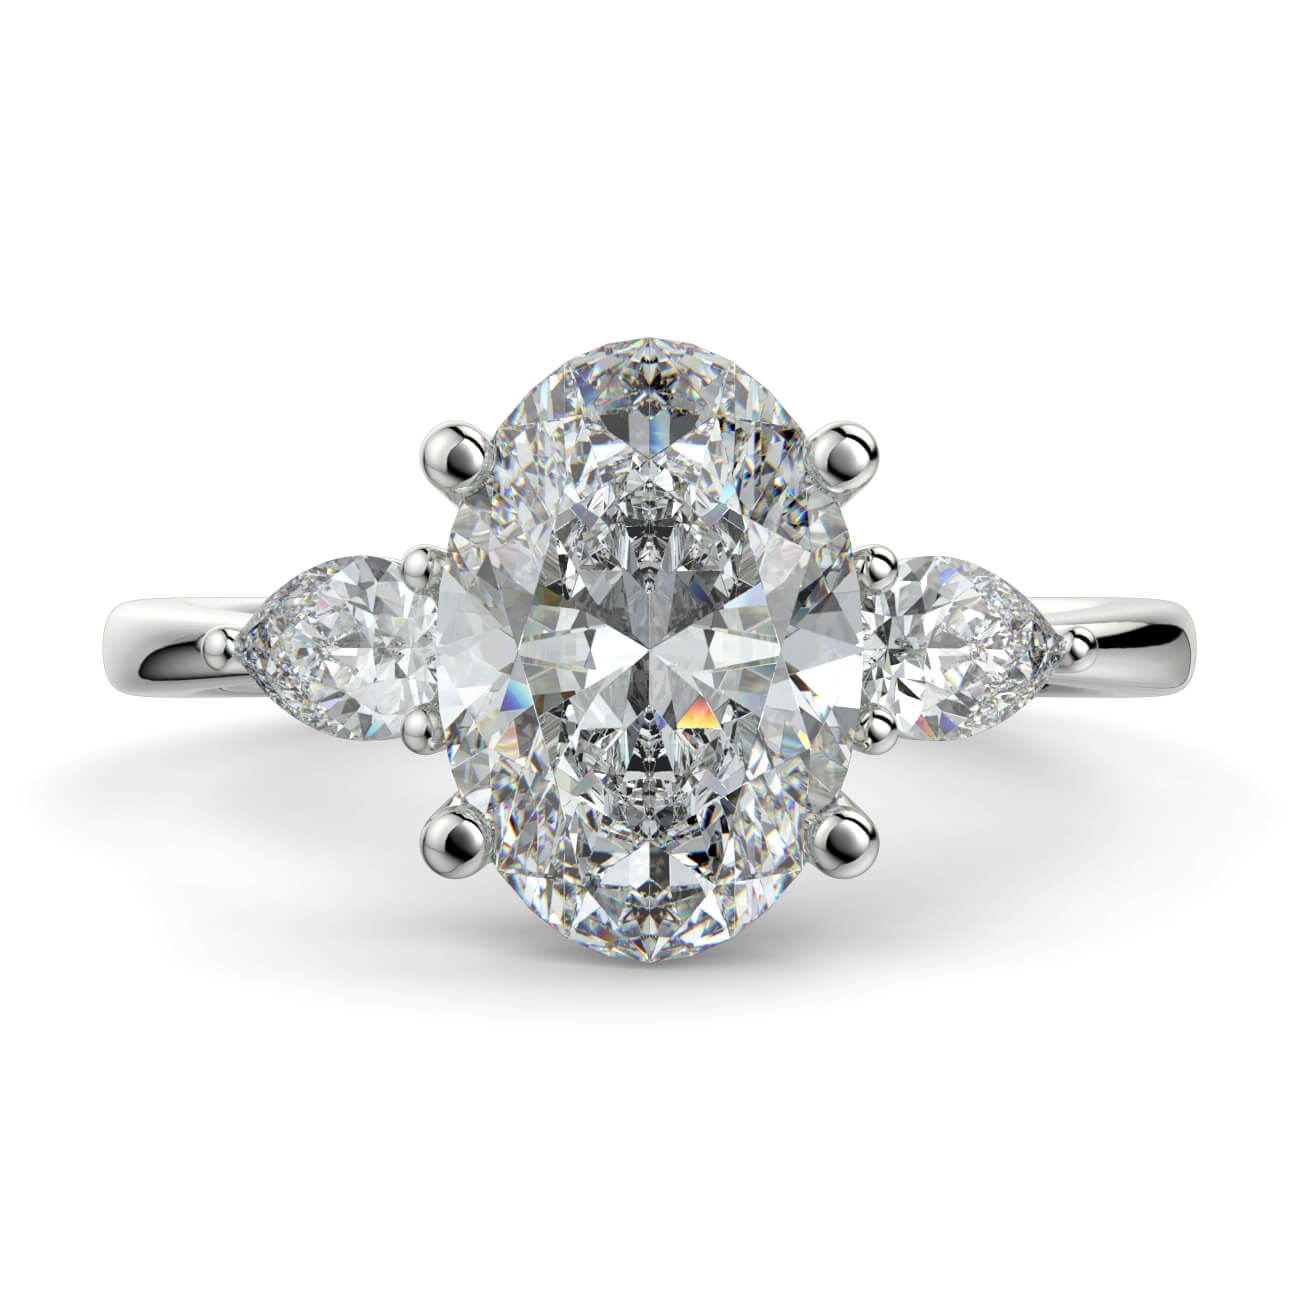 Oval Shape Diamond Ring With Pear Shape Side Diamonds In 18k White Gold – Australian Diamond Network